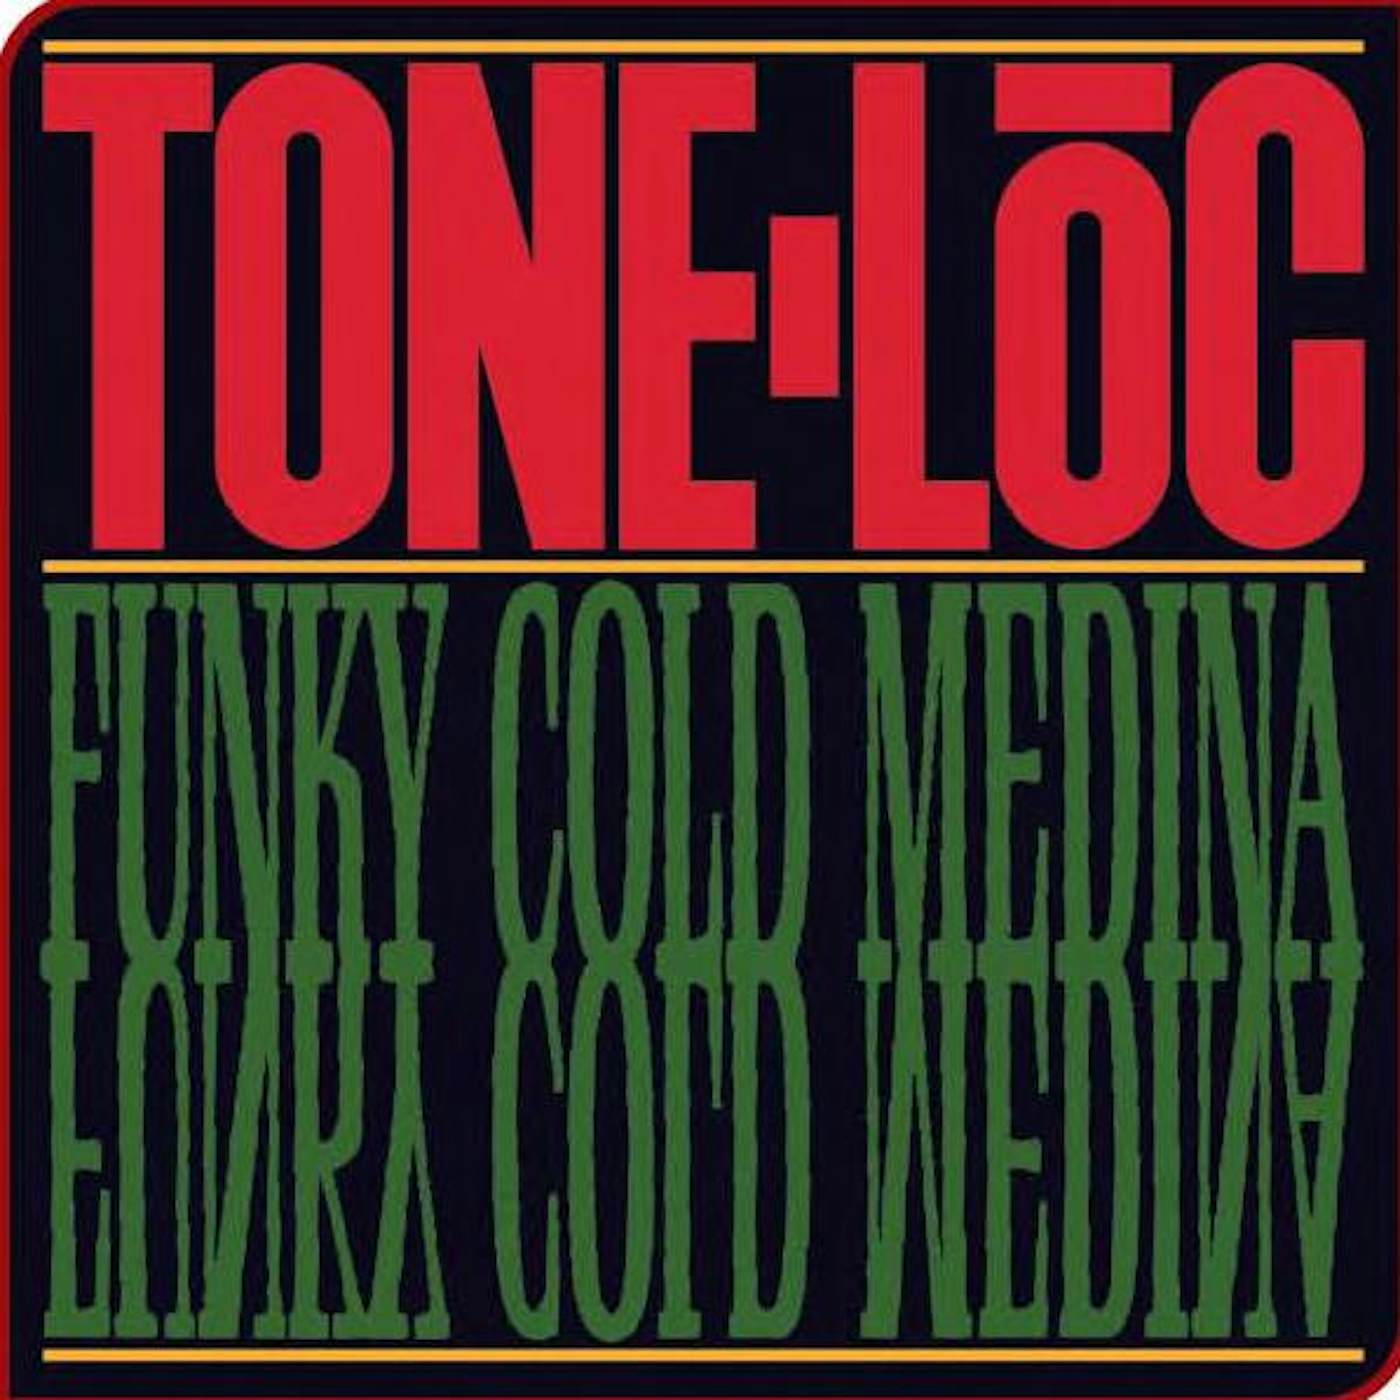 Tone-Loc FUNKY COLD MEDINA Vinyl Record